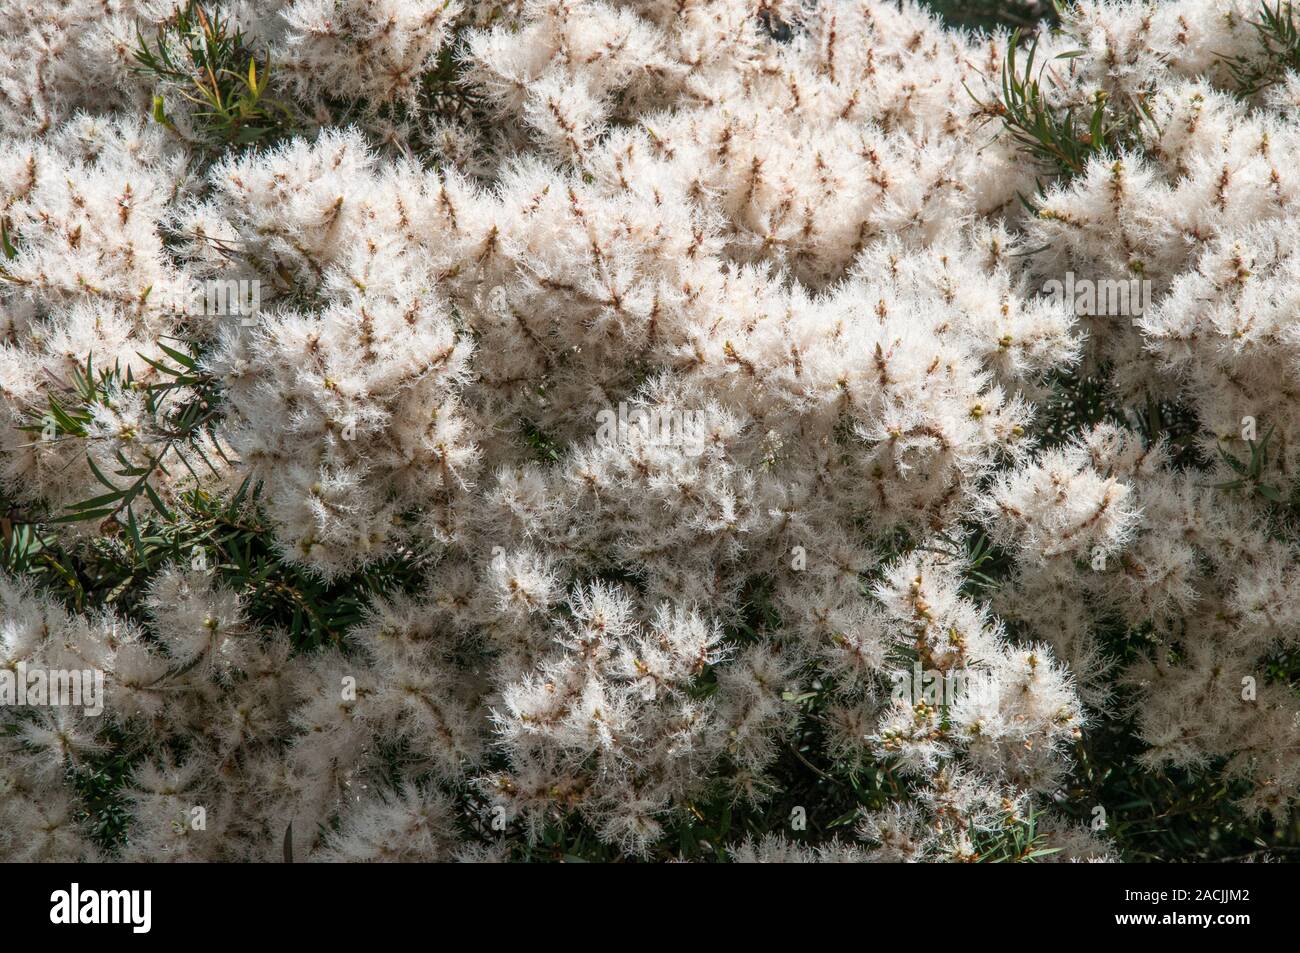 Summer foliage of Snow in Summer, melaleuca linariifolia, an Australian native tree. Stock Photo